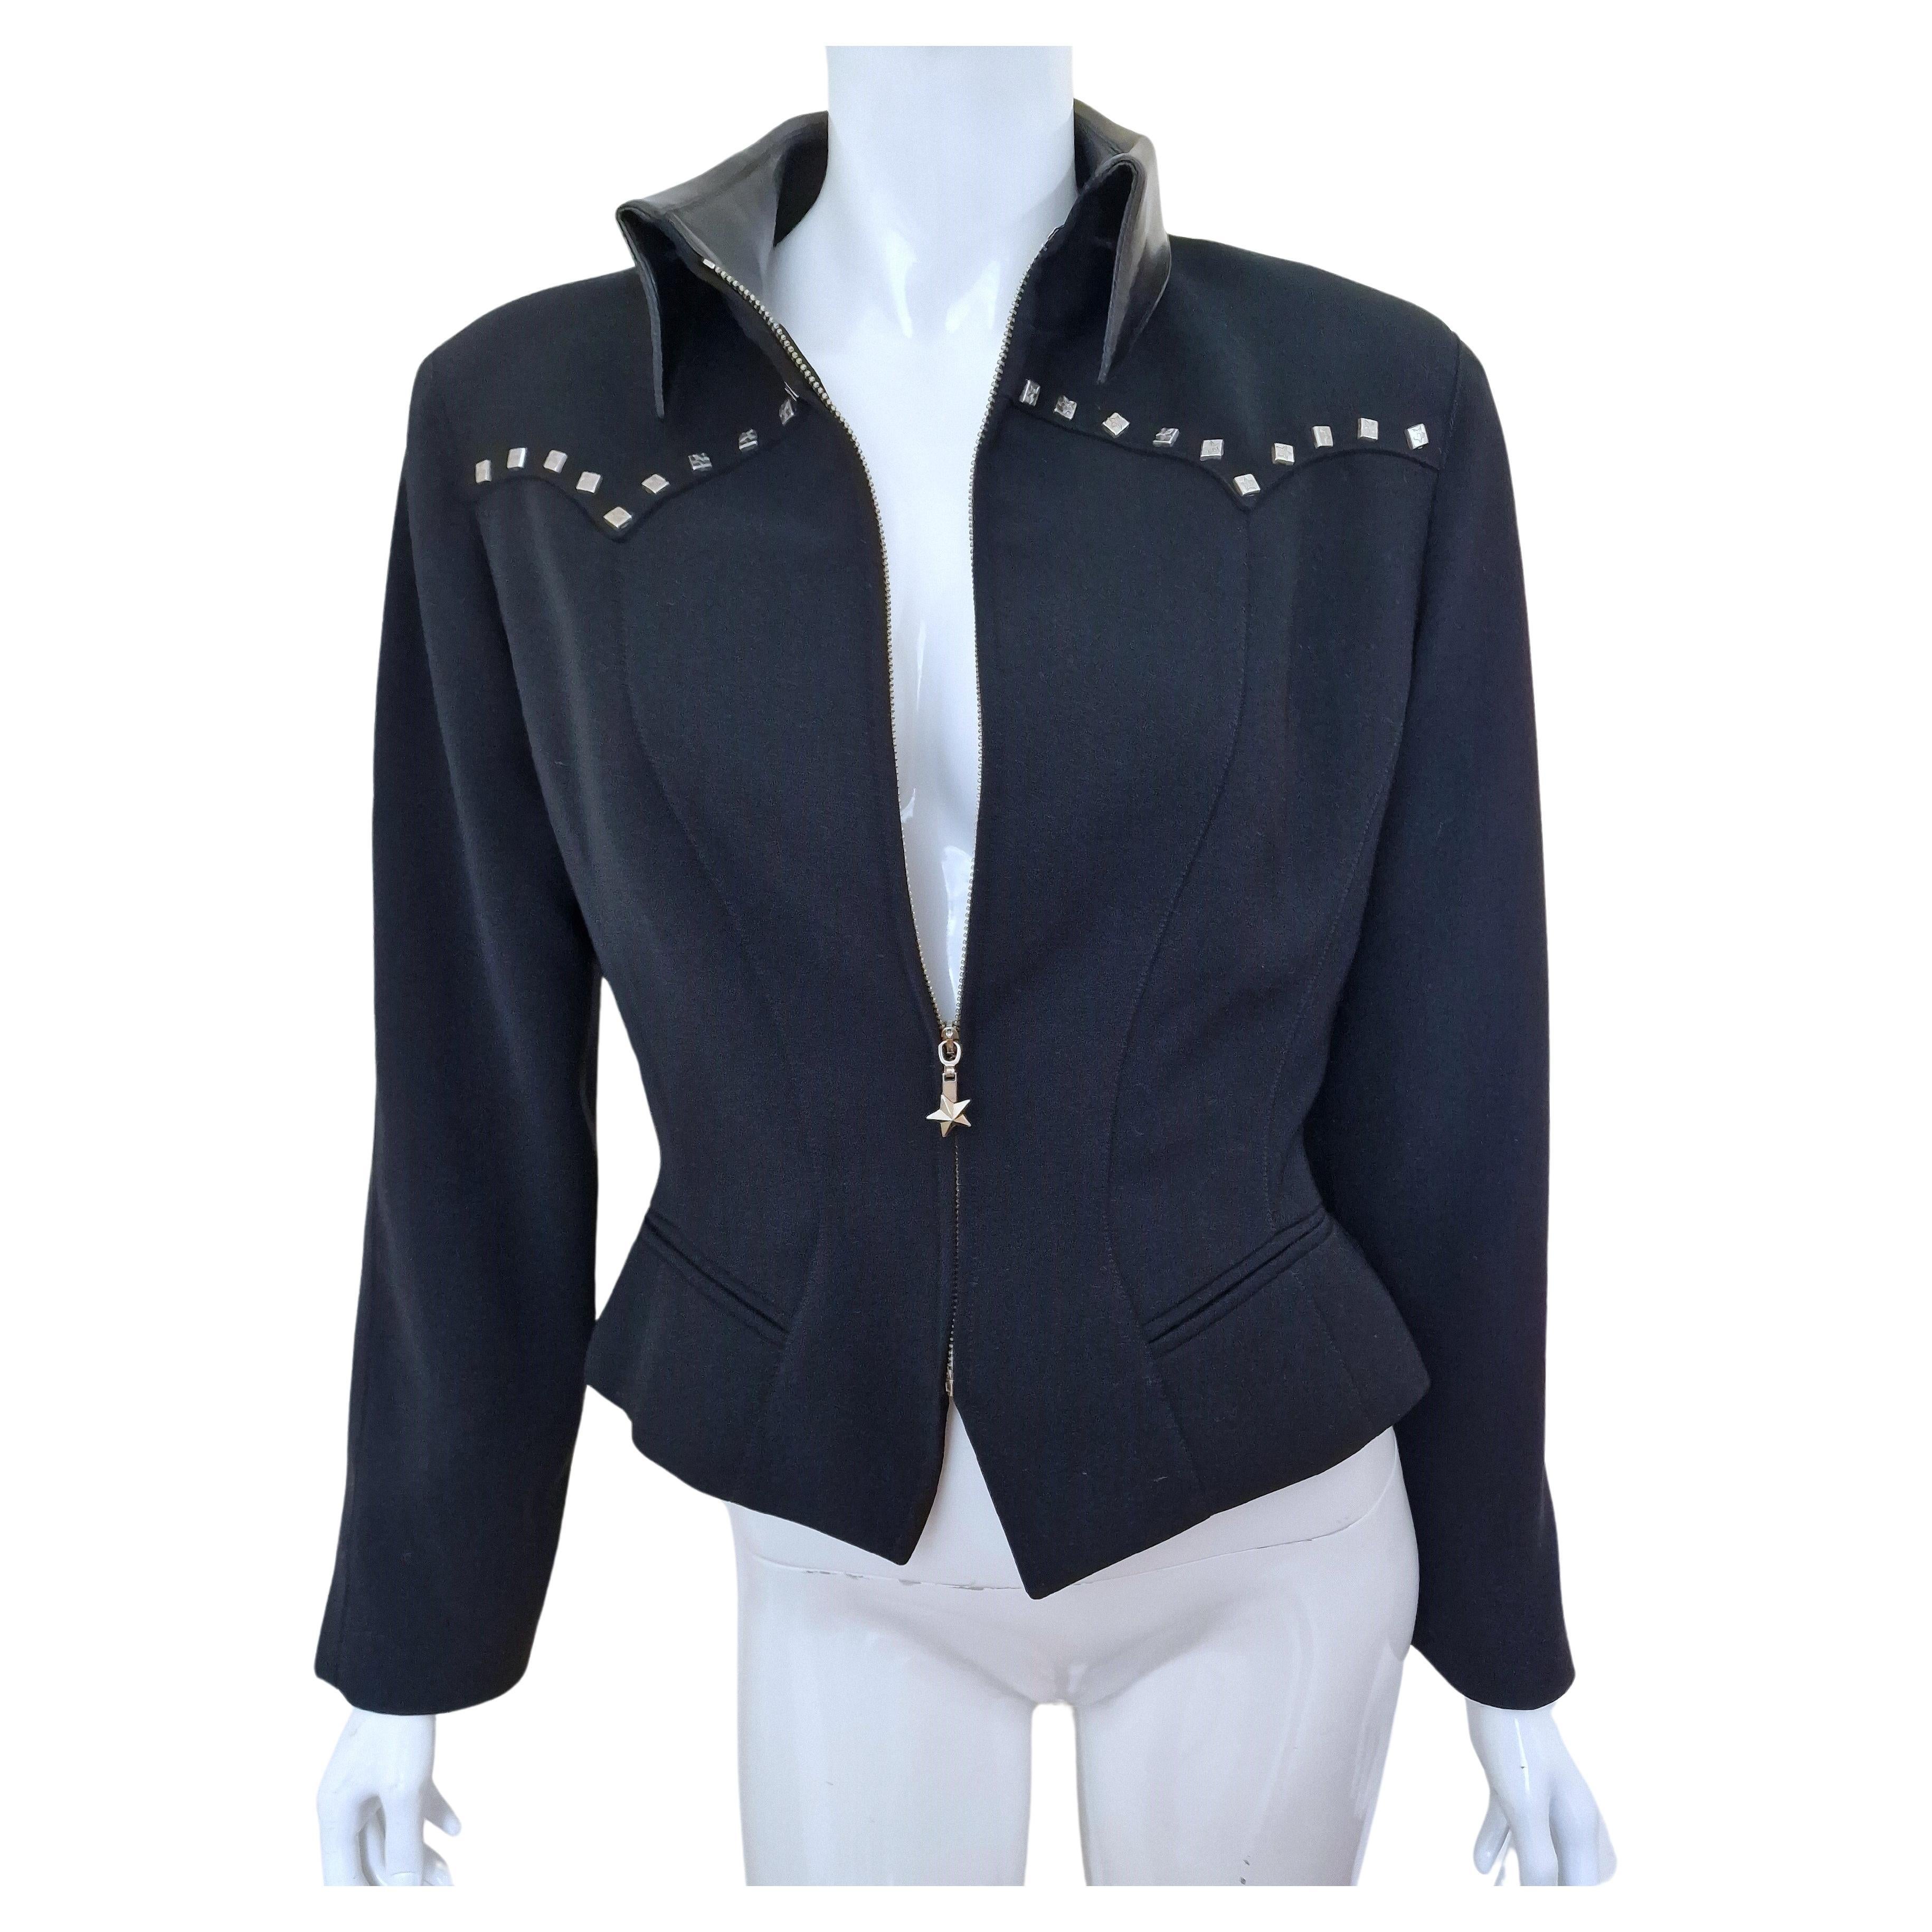 Thierry Mugler Rivet Riveted Metal Star Zipper Medium Large Blazer Black Jacket For Sale